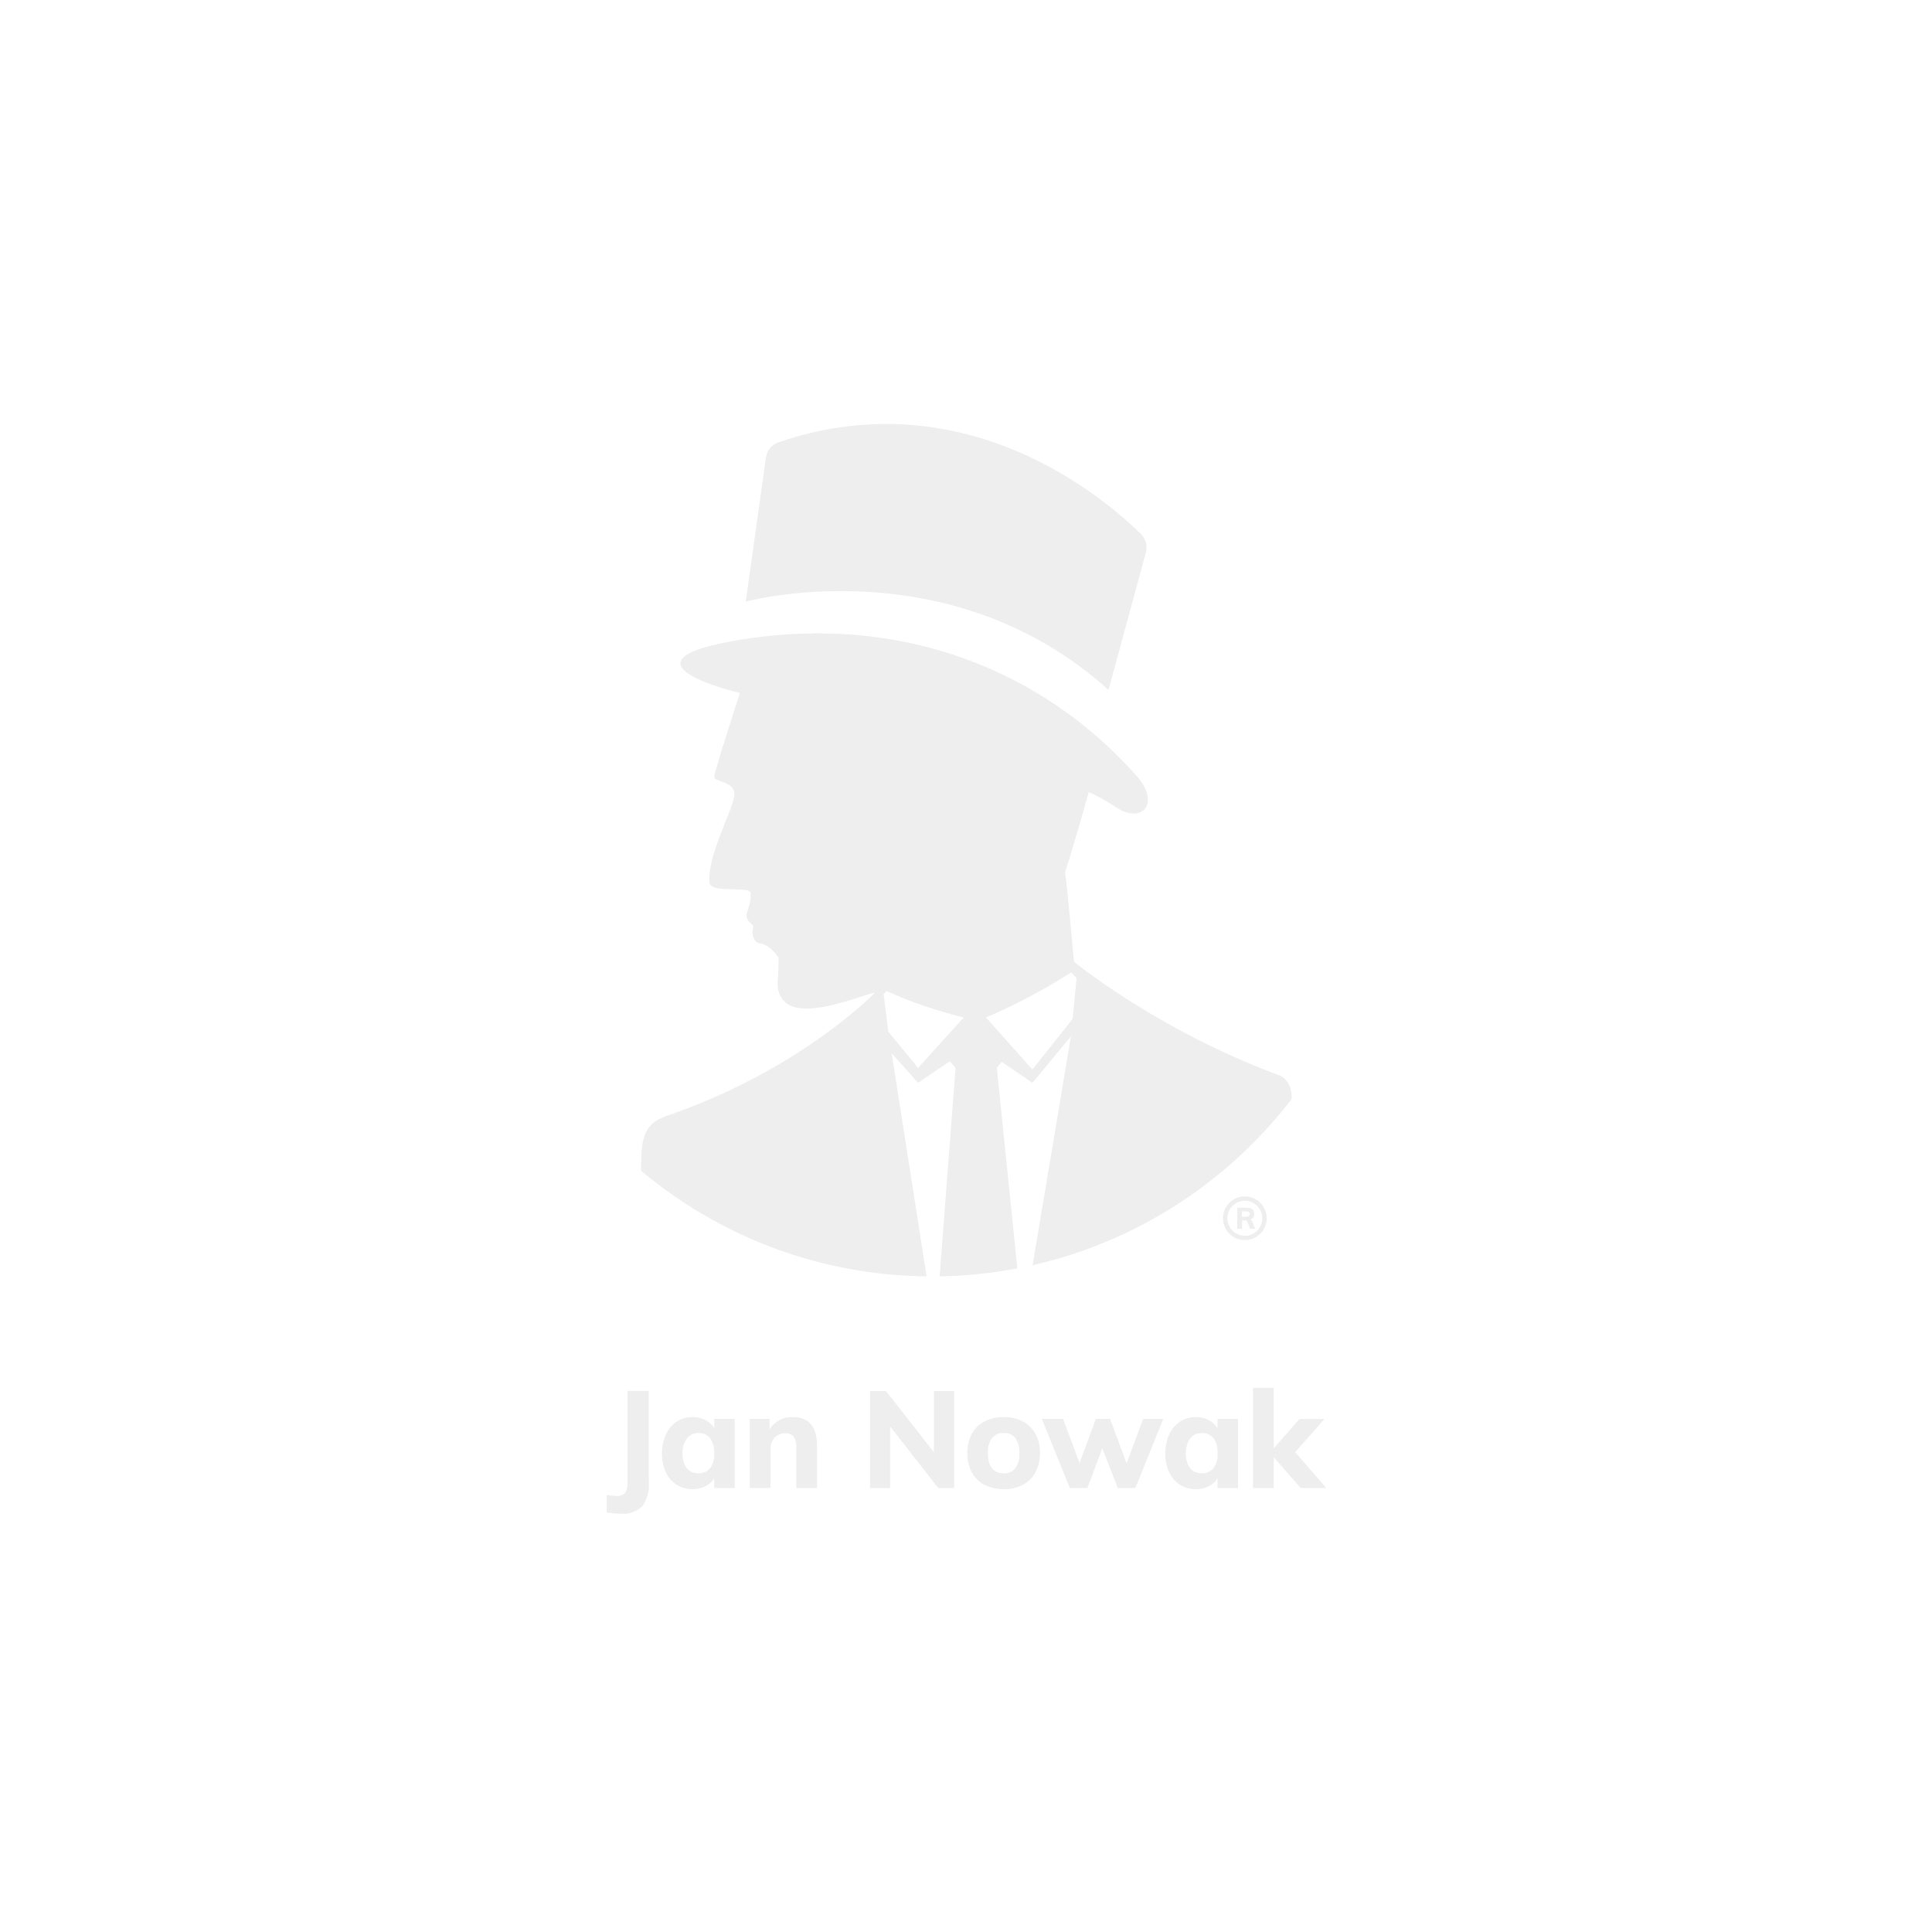 JAN NOWAK model SARA V005 460x1630x620 metalowa szafa kartotekowa biała